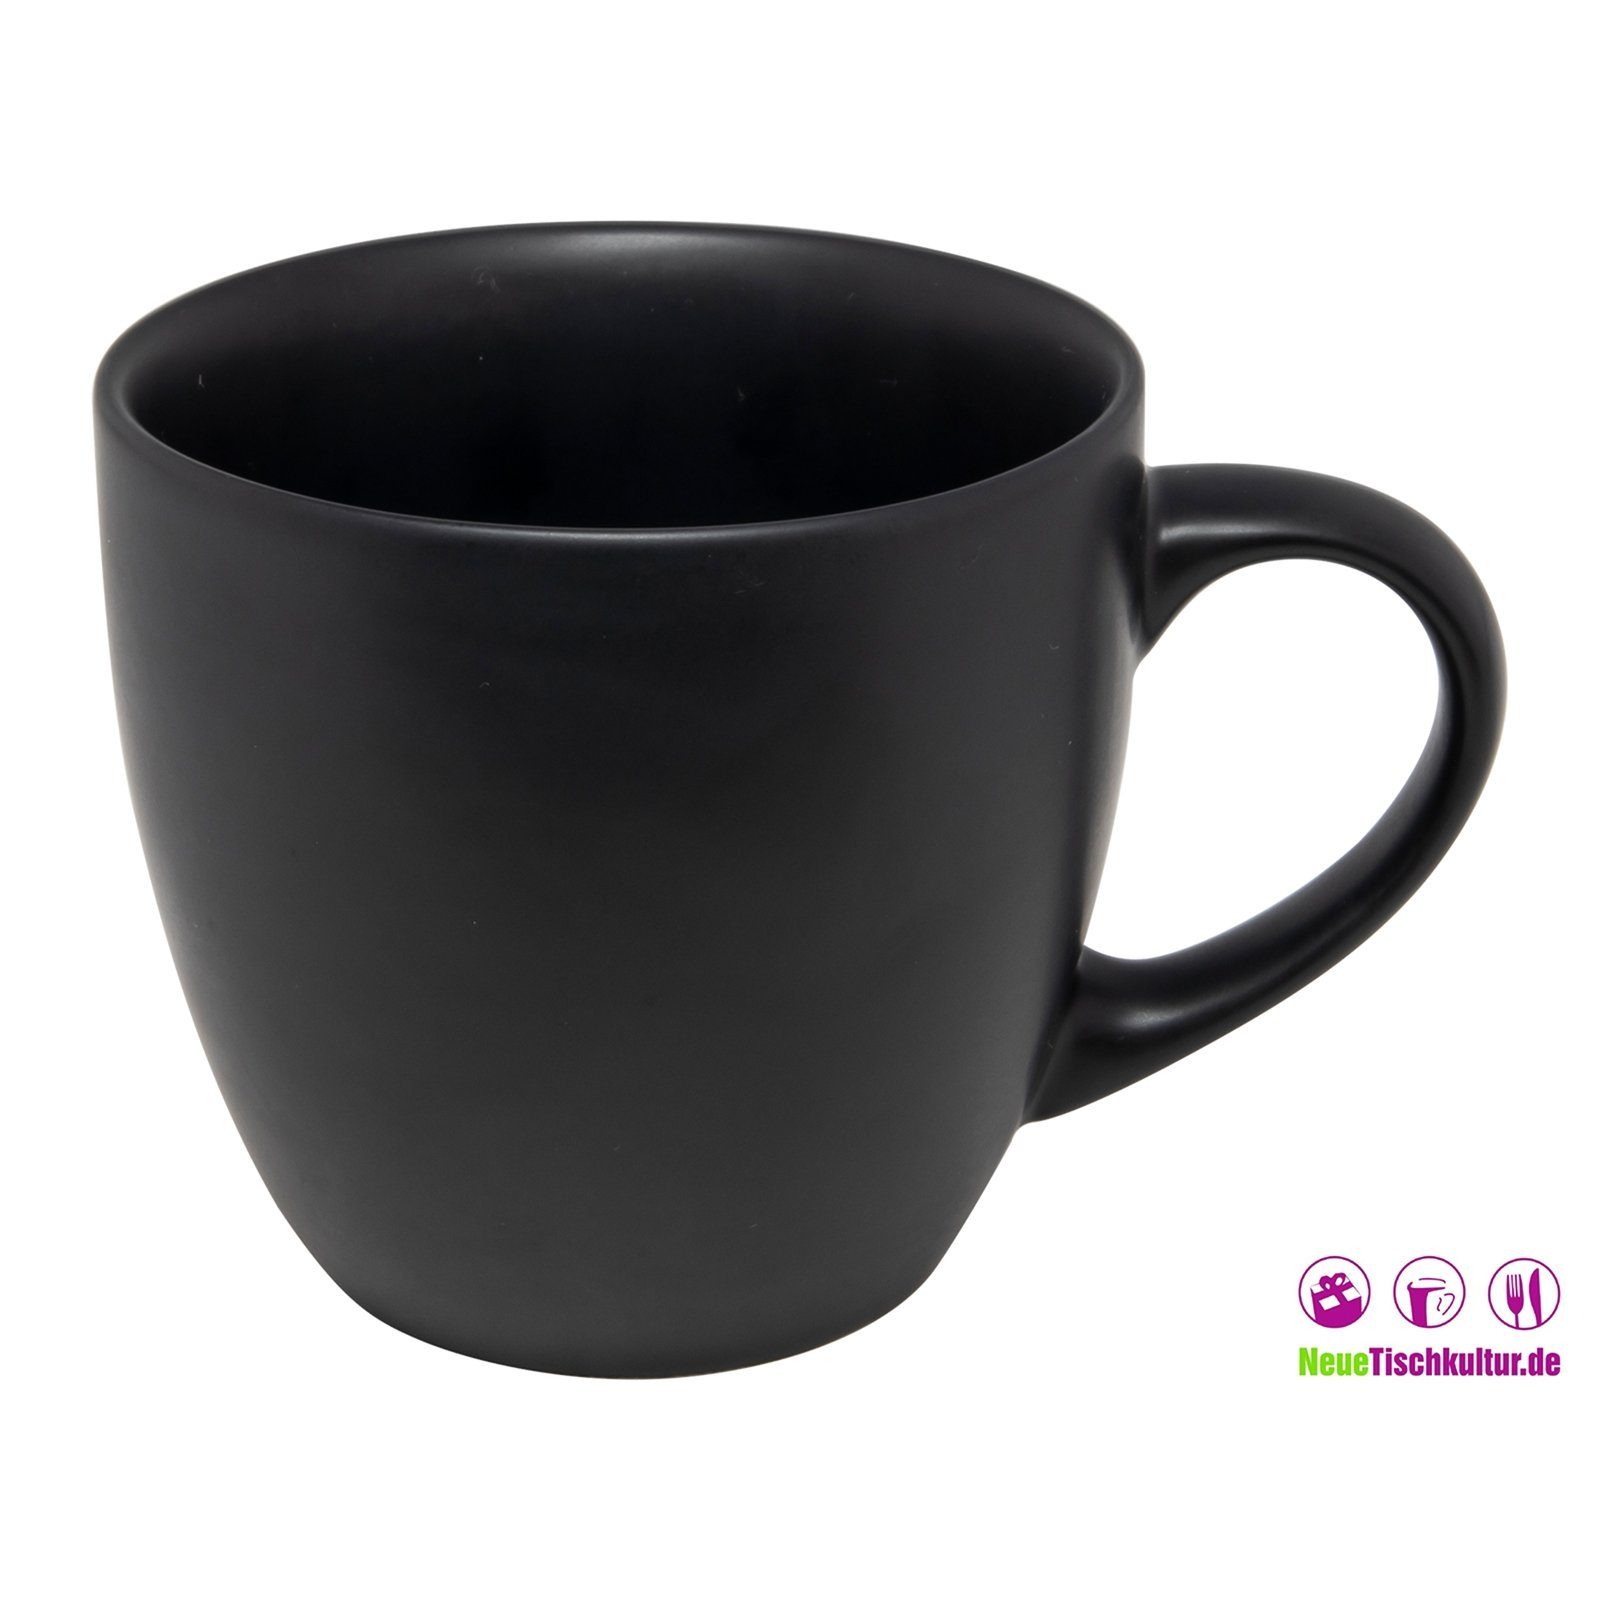 Neuetischkultur Tasse Keramik, er Tasse Matt, Teetasse 4 Kaffeetasse Black Set